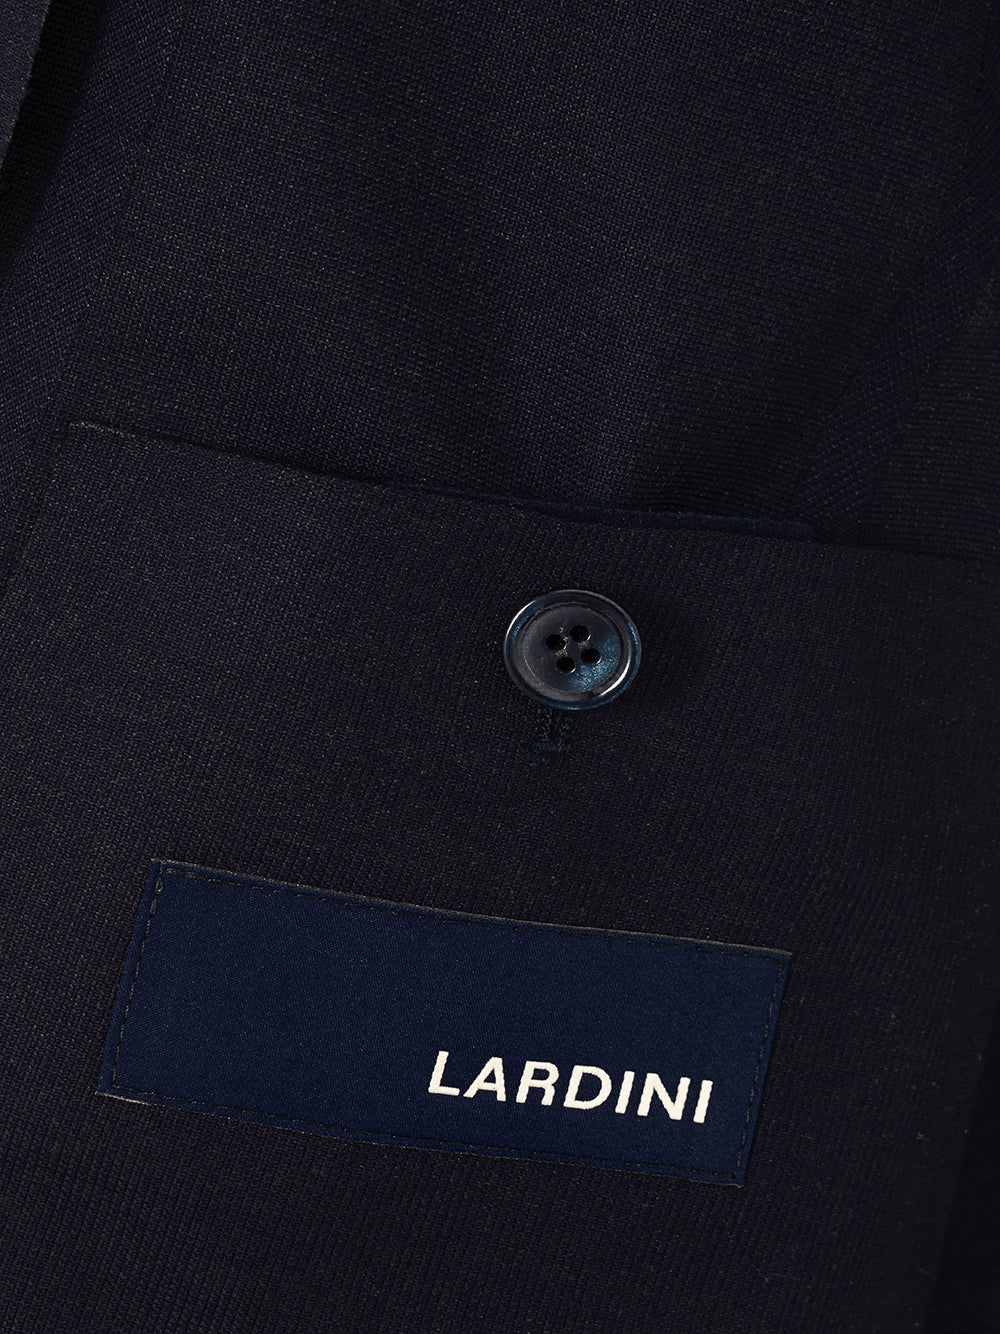 Lardini Two Button Jacket